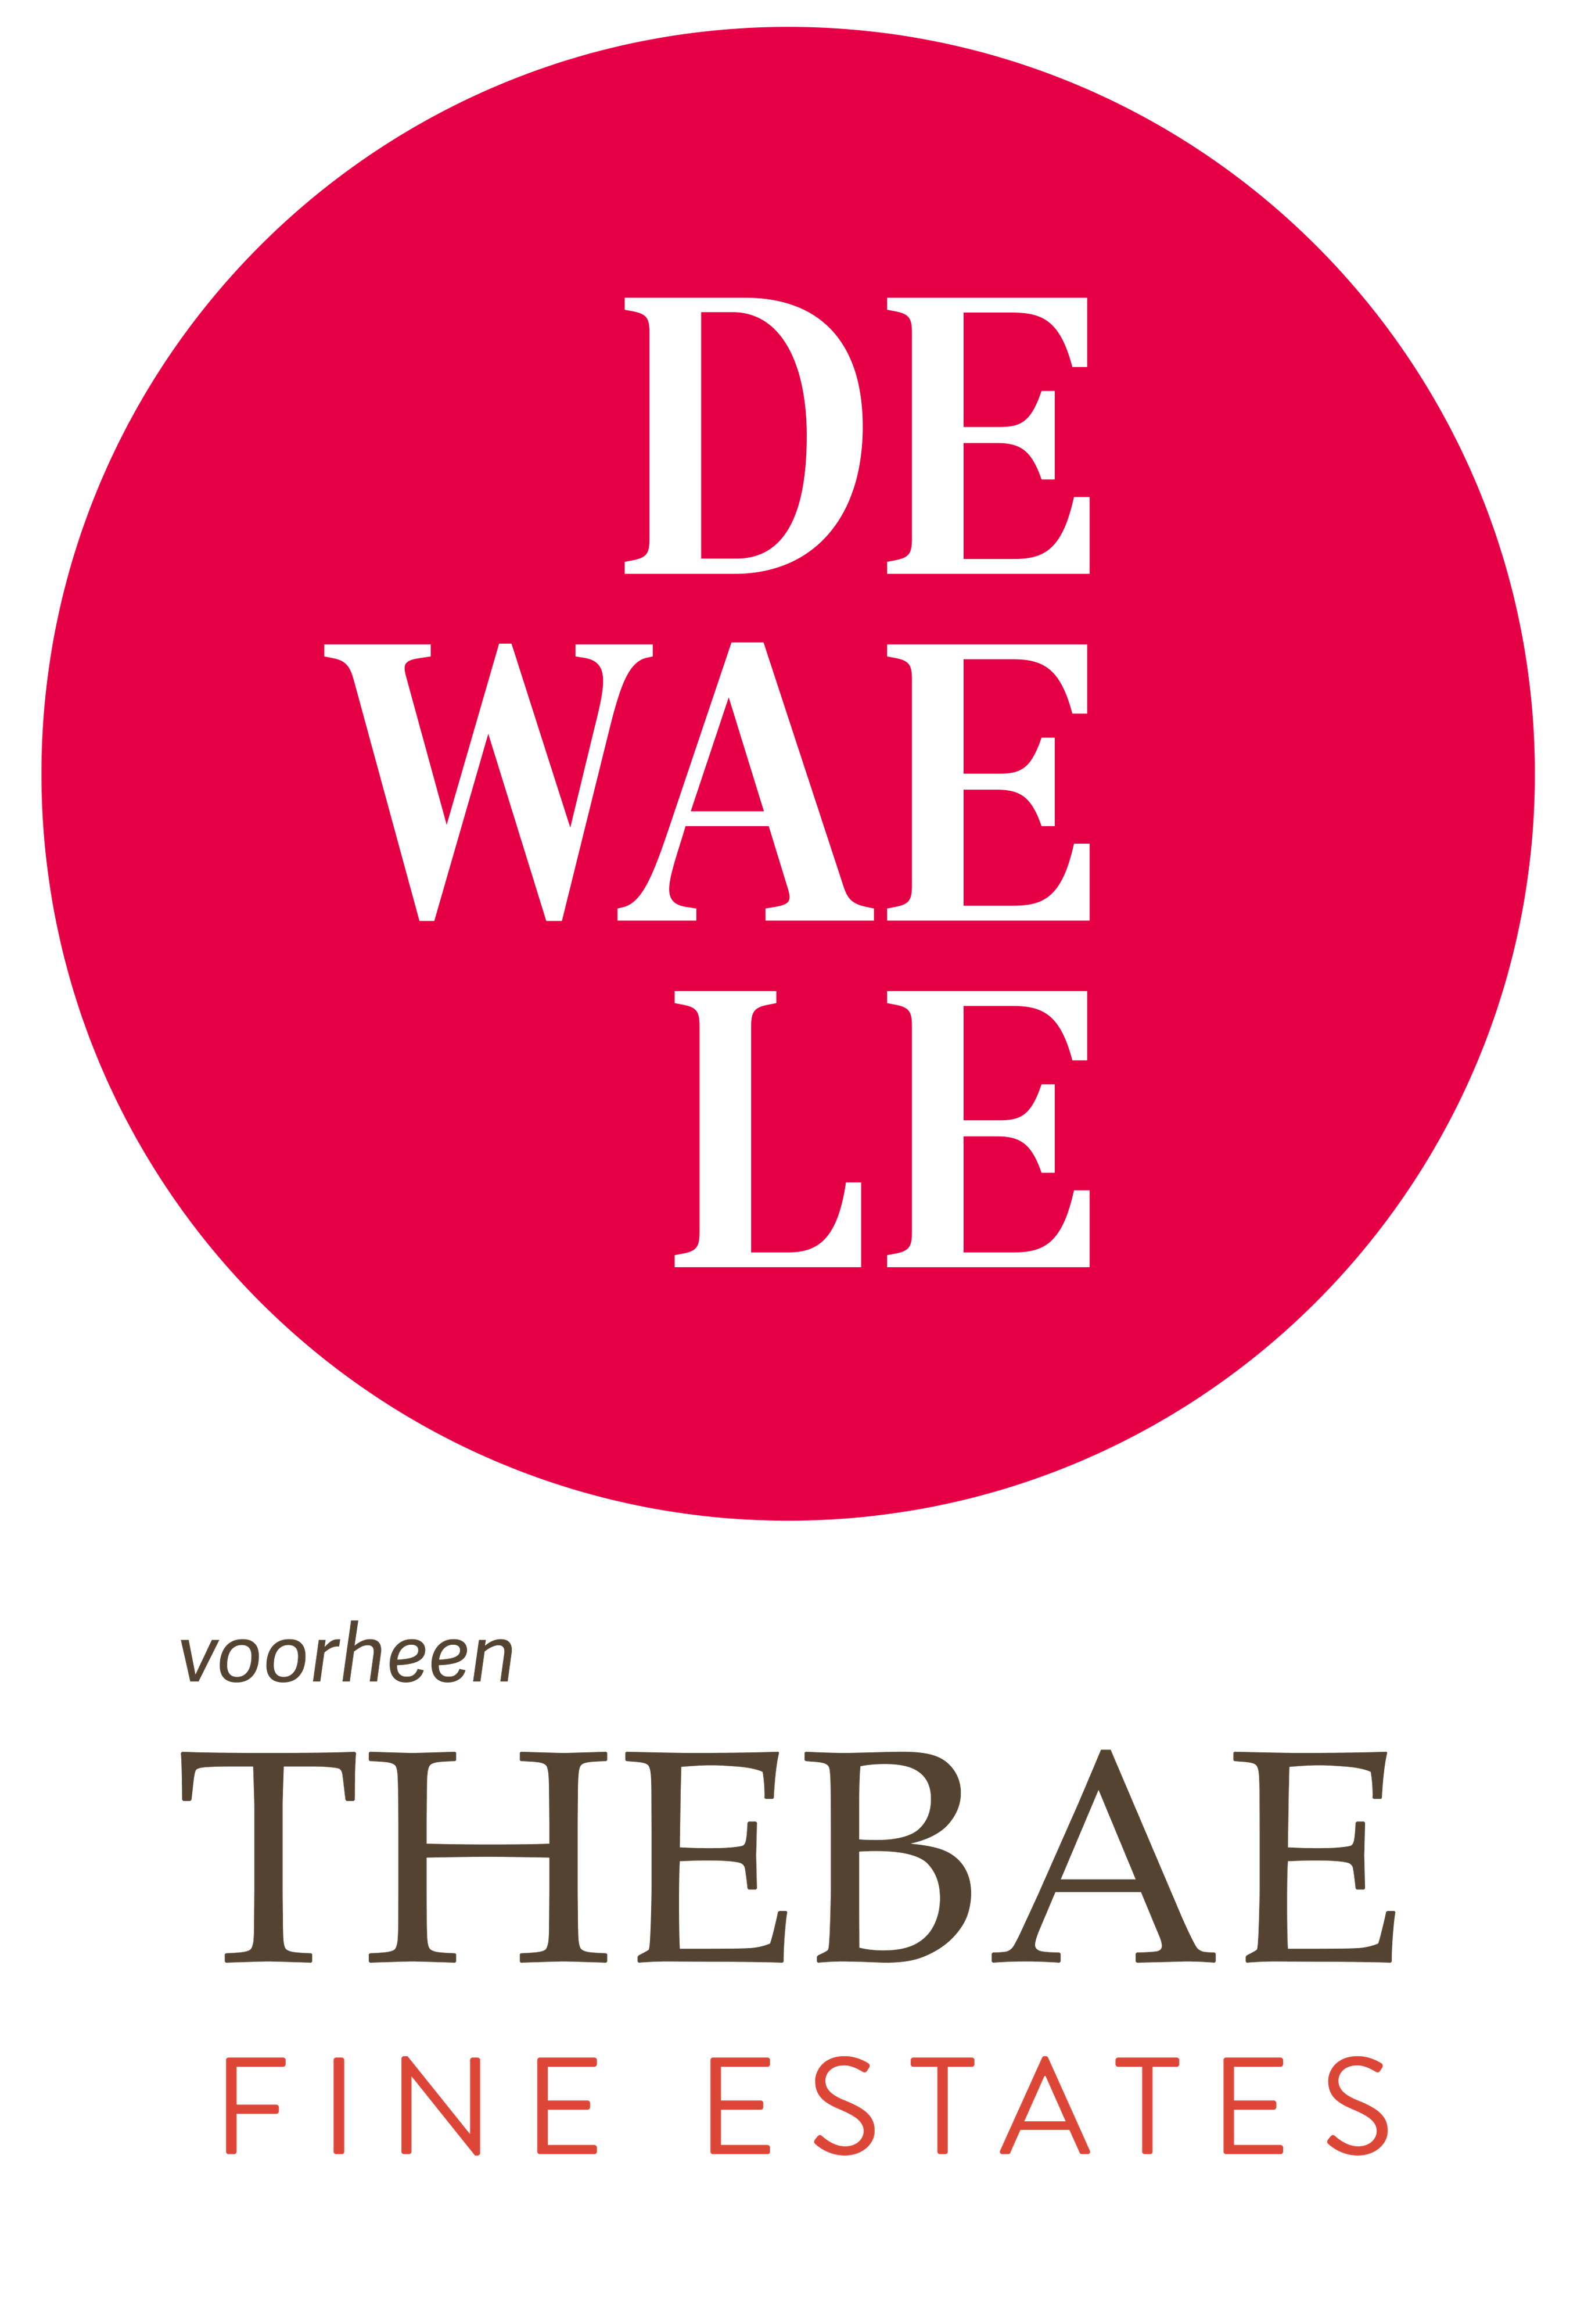 dewaele-Thebae-latem-logo_office:3010